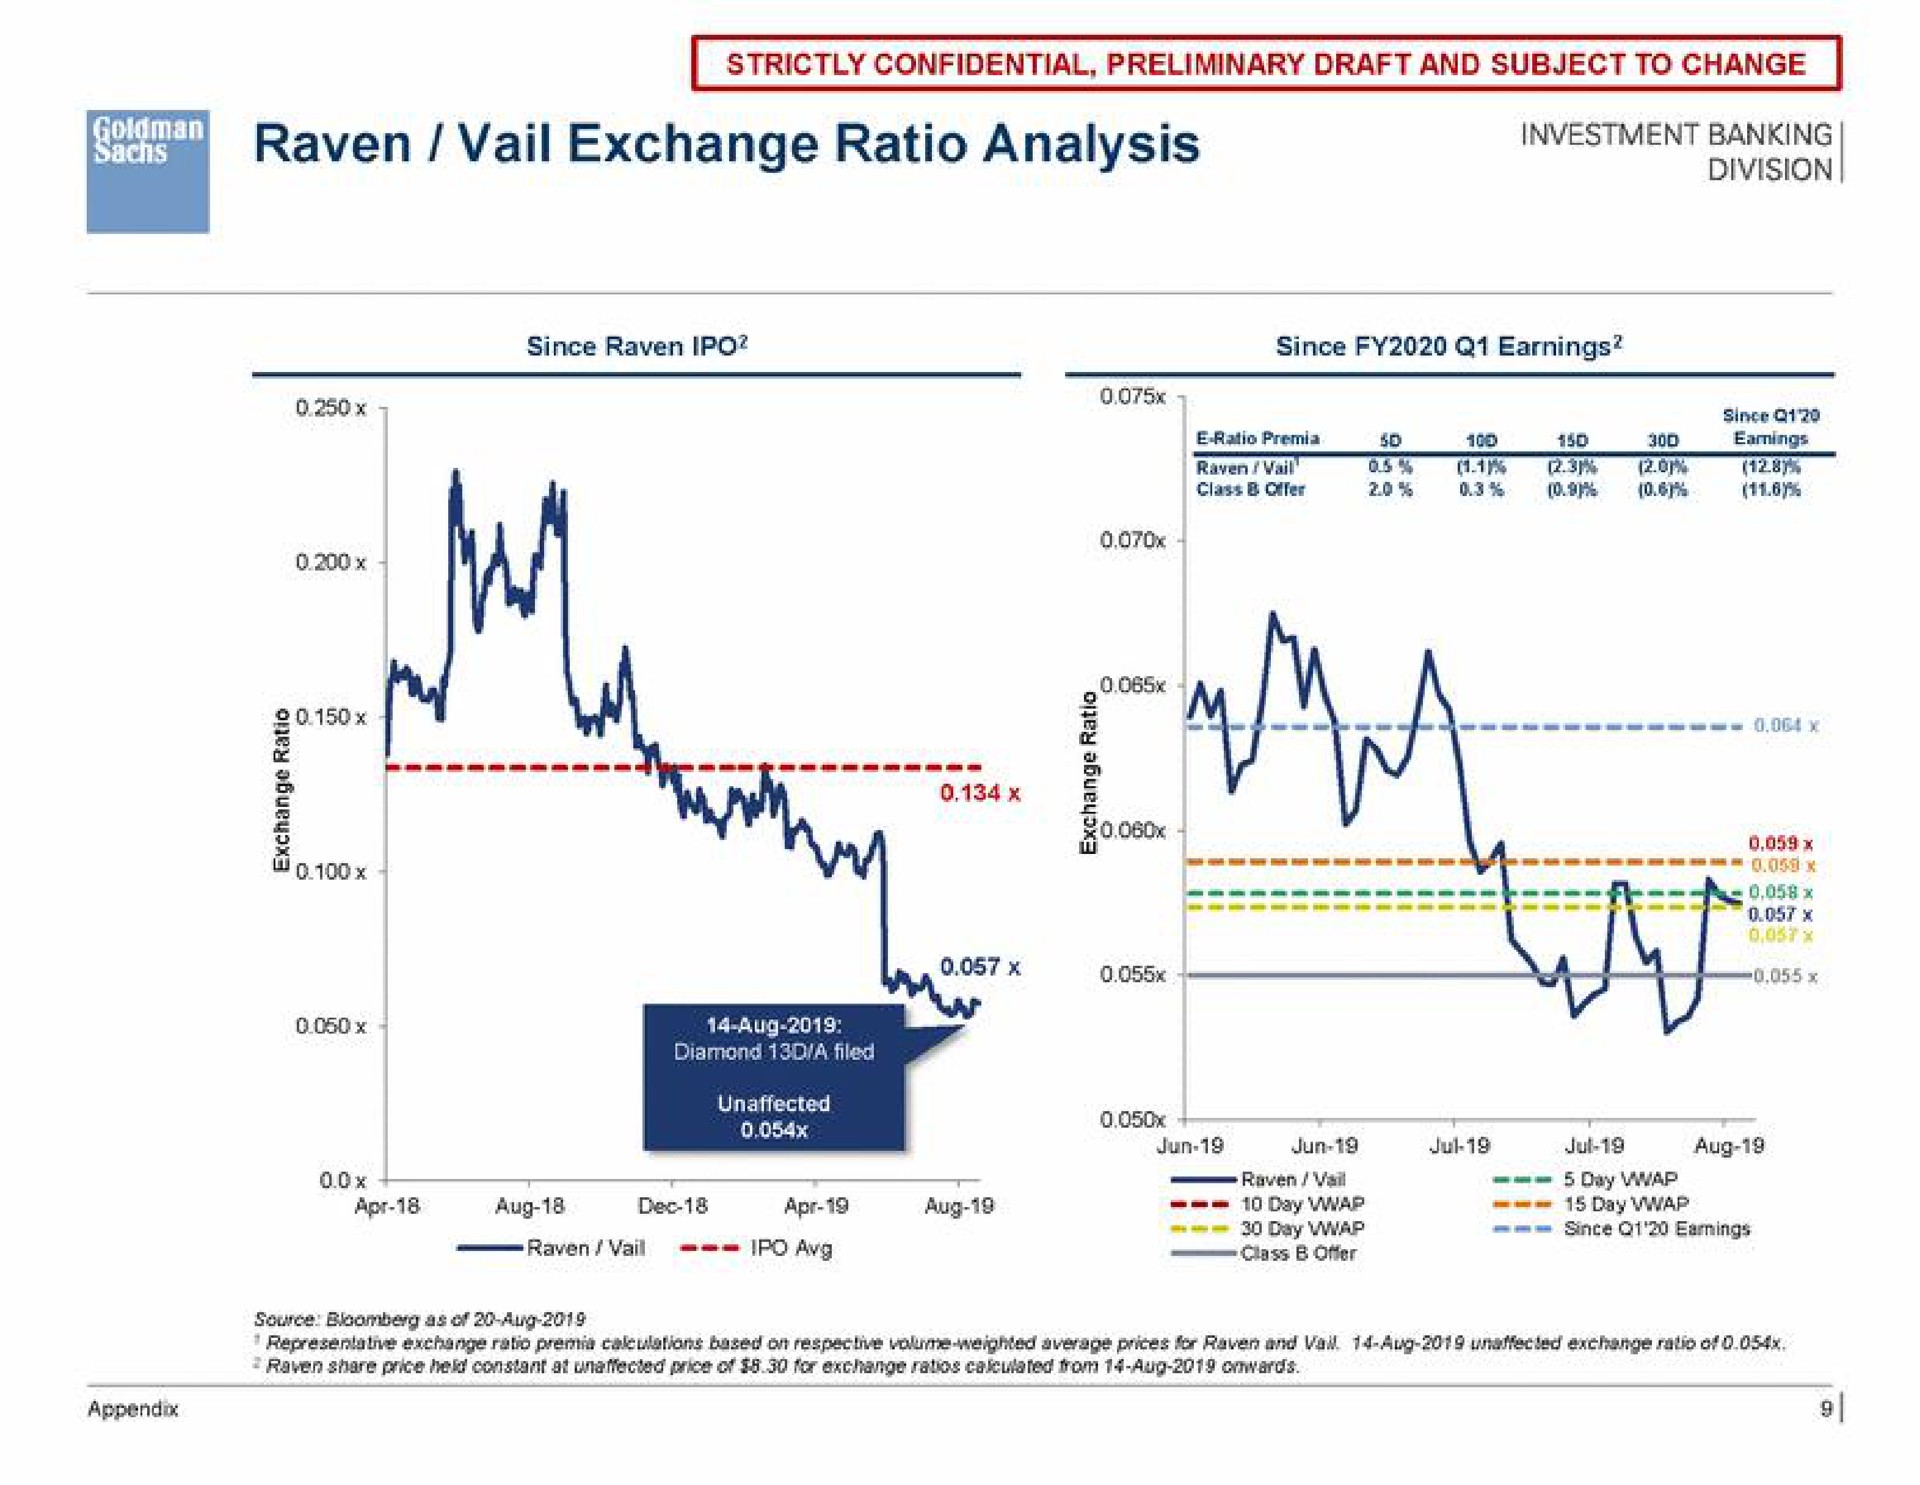 raven vail exchange ratio analysis a | Goldman Sachs